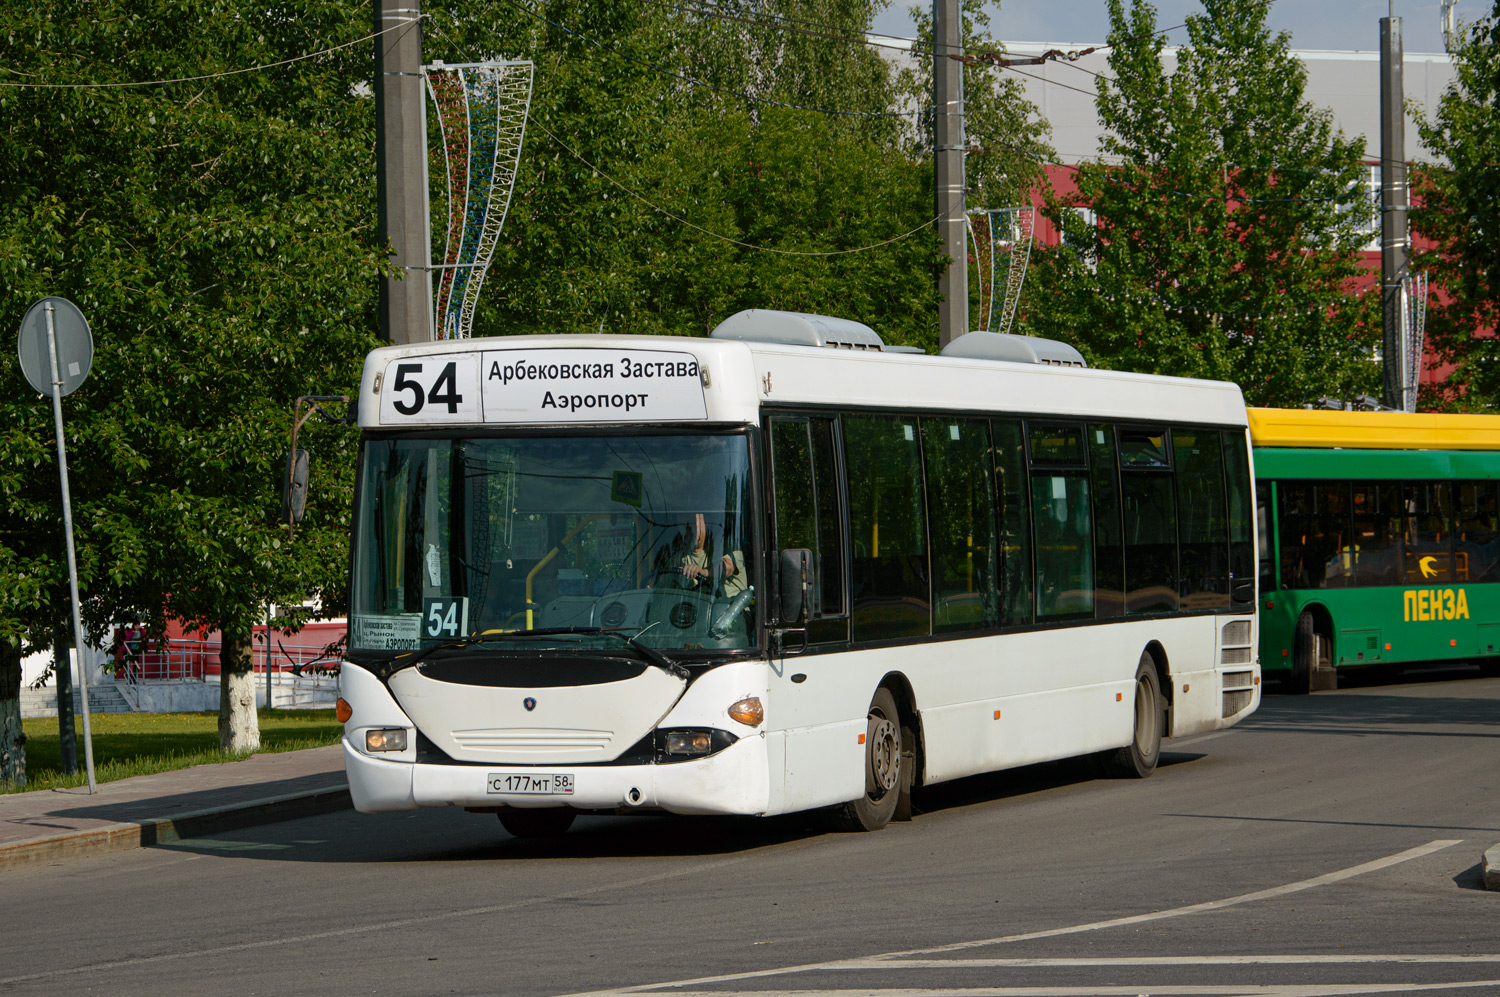 Penza region, Scania OmniLink I (Scania-St.Petersburg) Nr. С 177 МТ 58